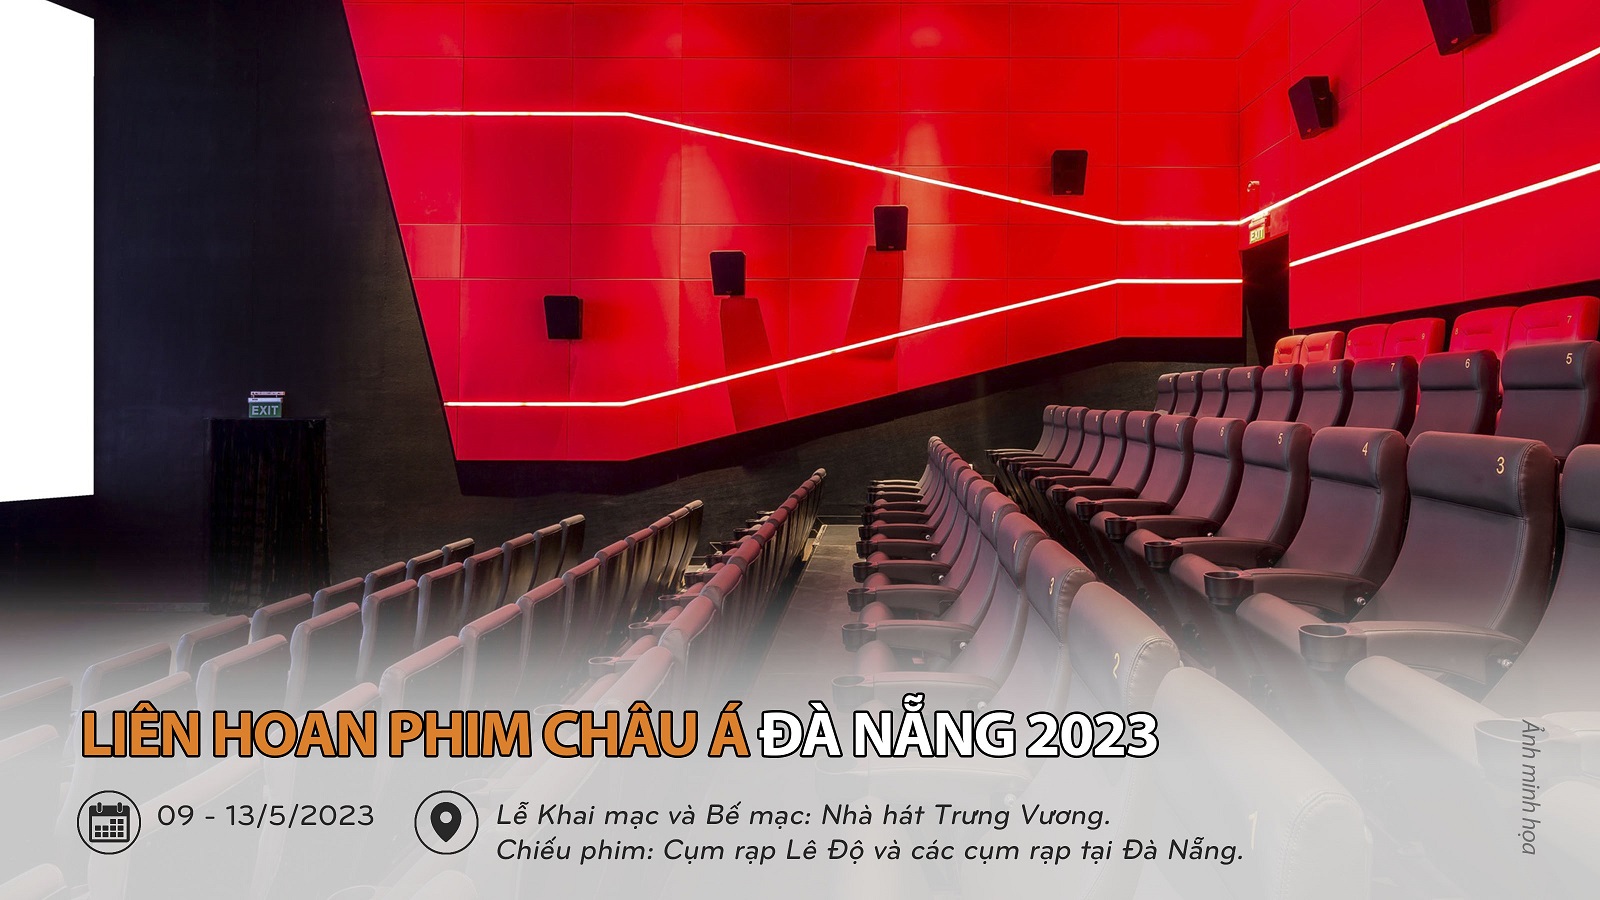 Lien Hoan Phim Chau A Danang 2023 Su Kien